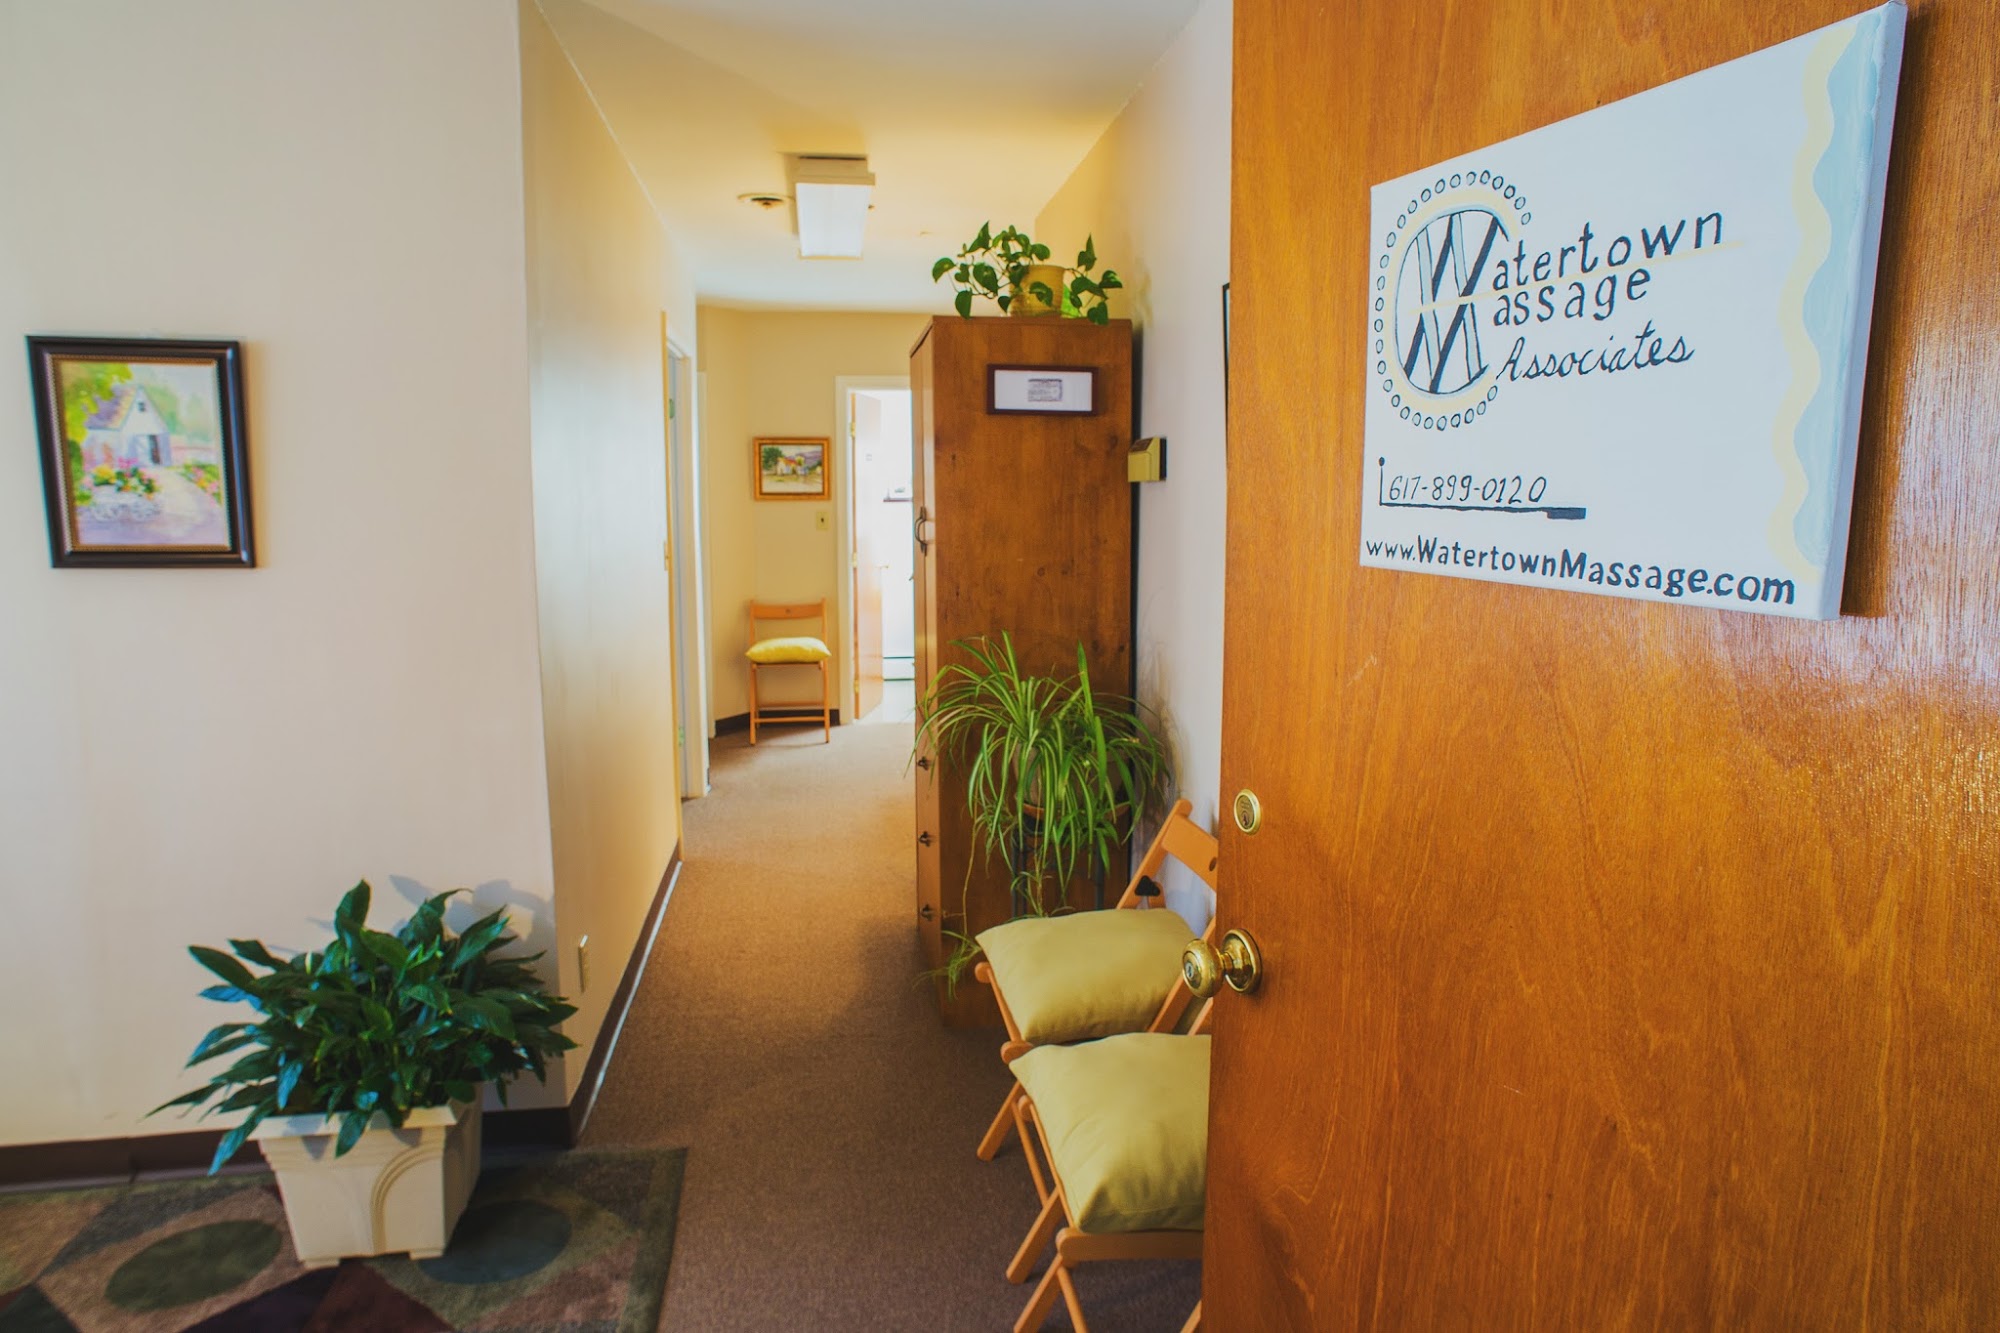 Watertown Massage Associates